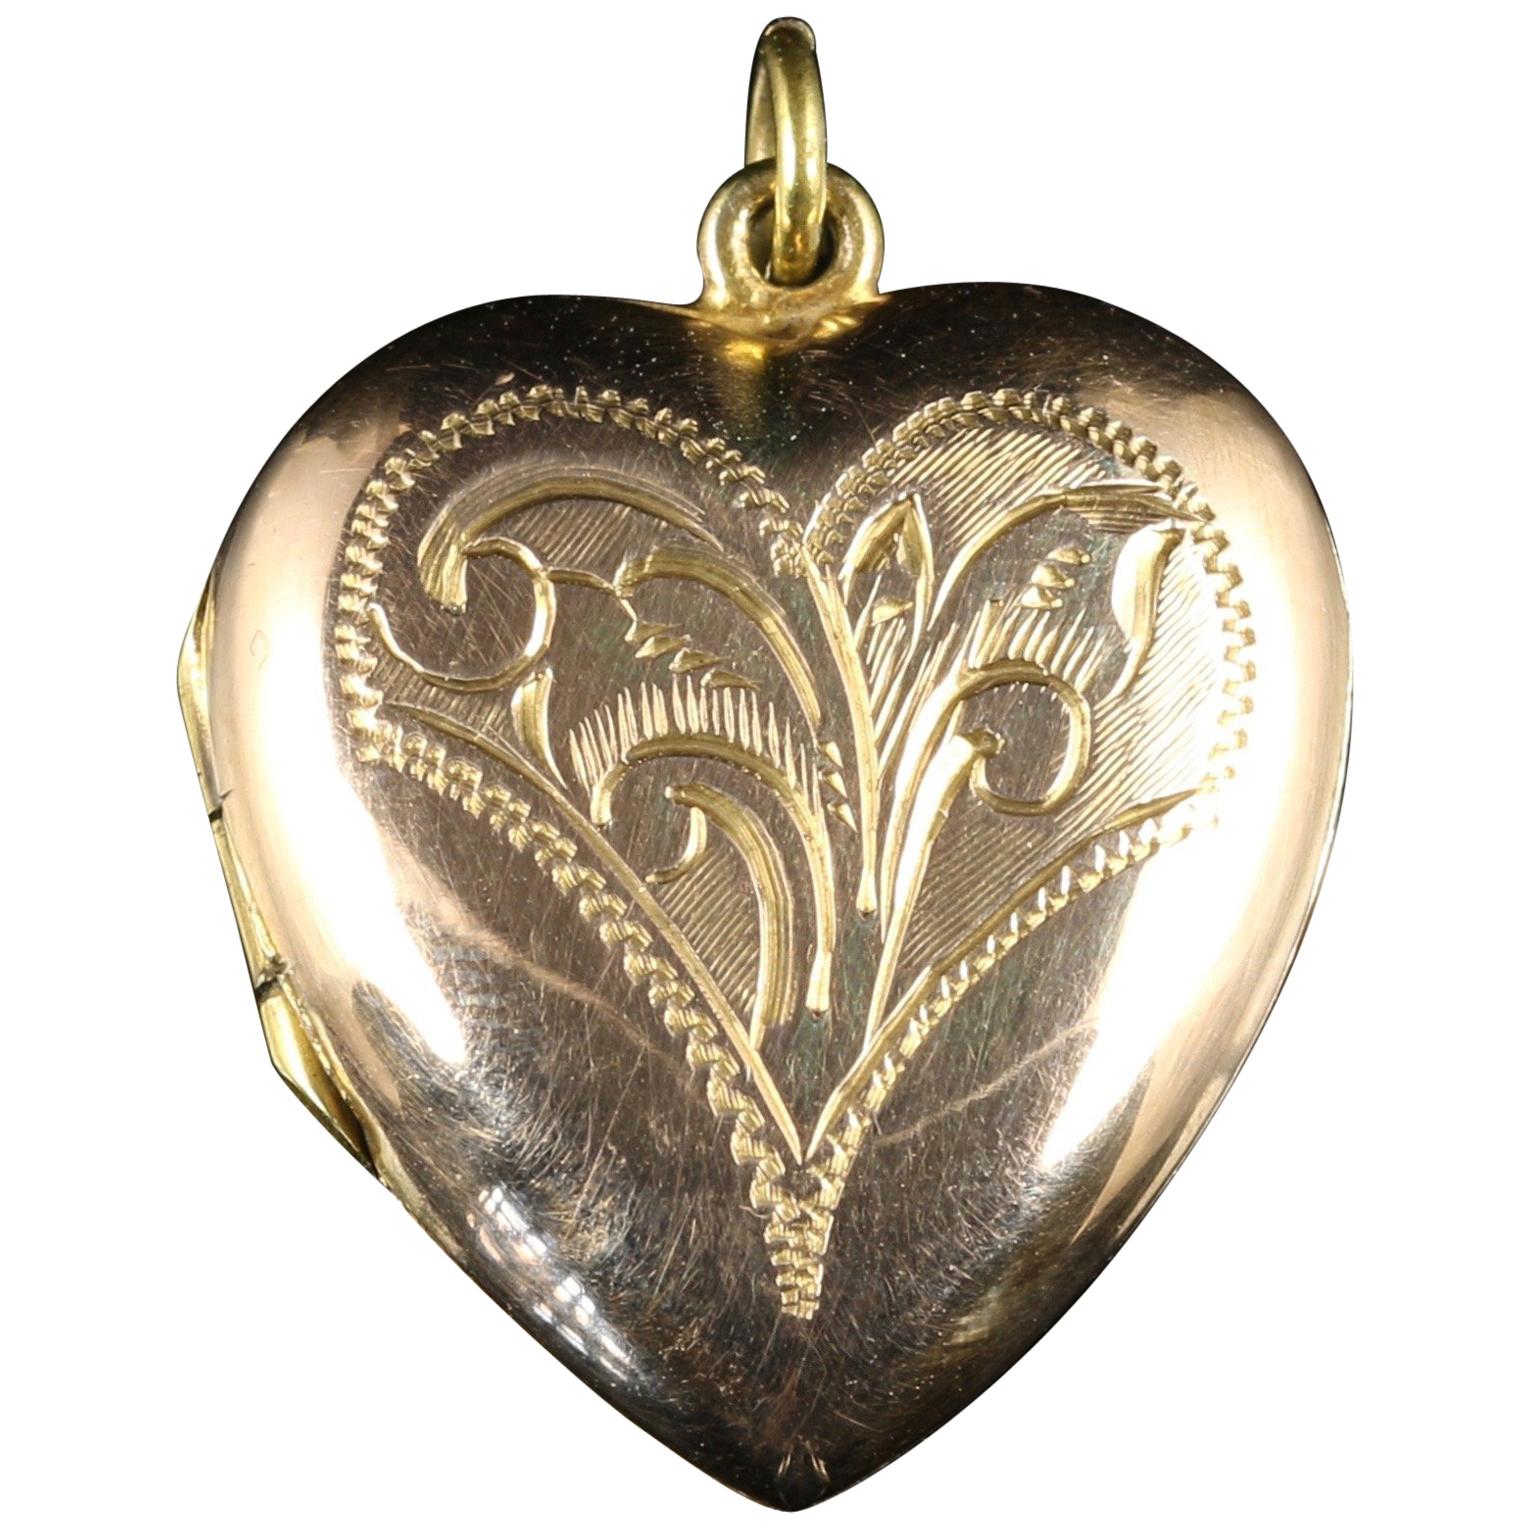 Antique Victorian 9 Carat Gold Heart Locket, circa 1890